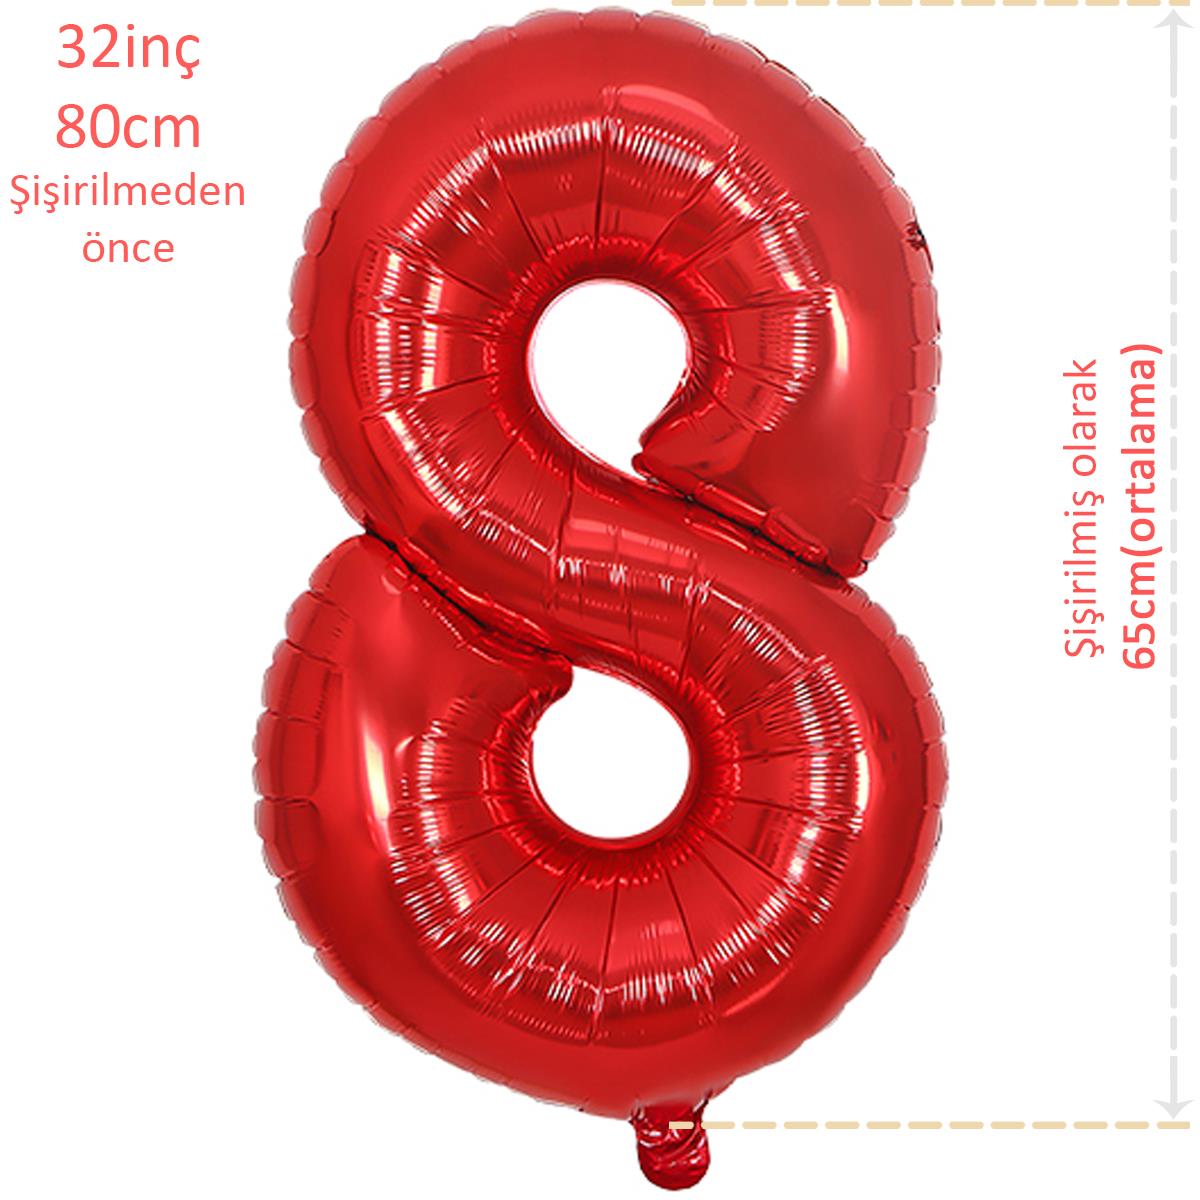 Rakam Folyo Balon Kırmızı 8 Rakamı 32inç 80cm